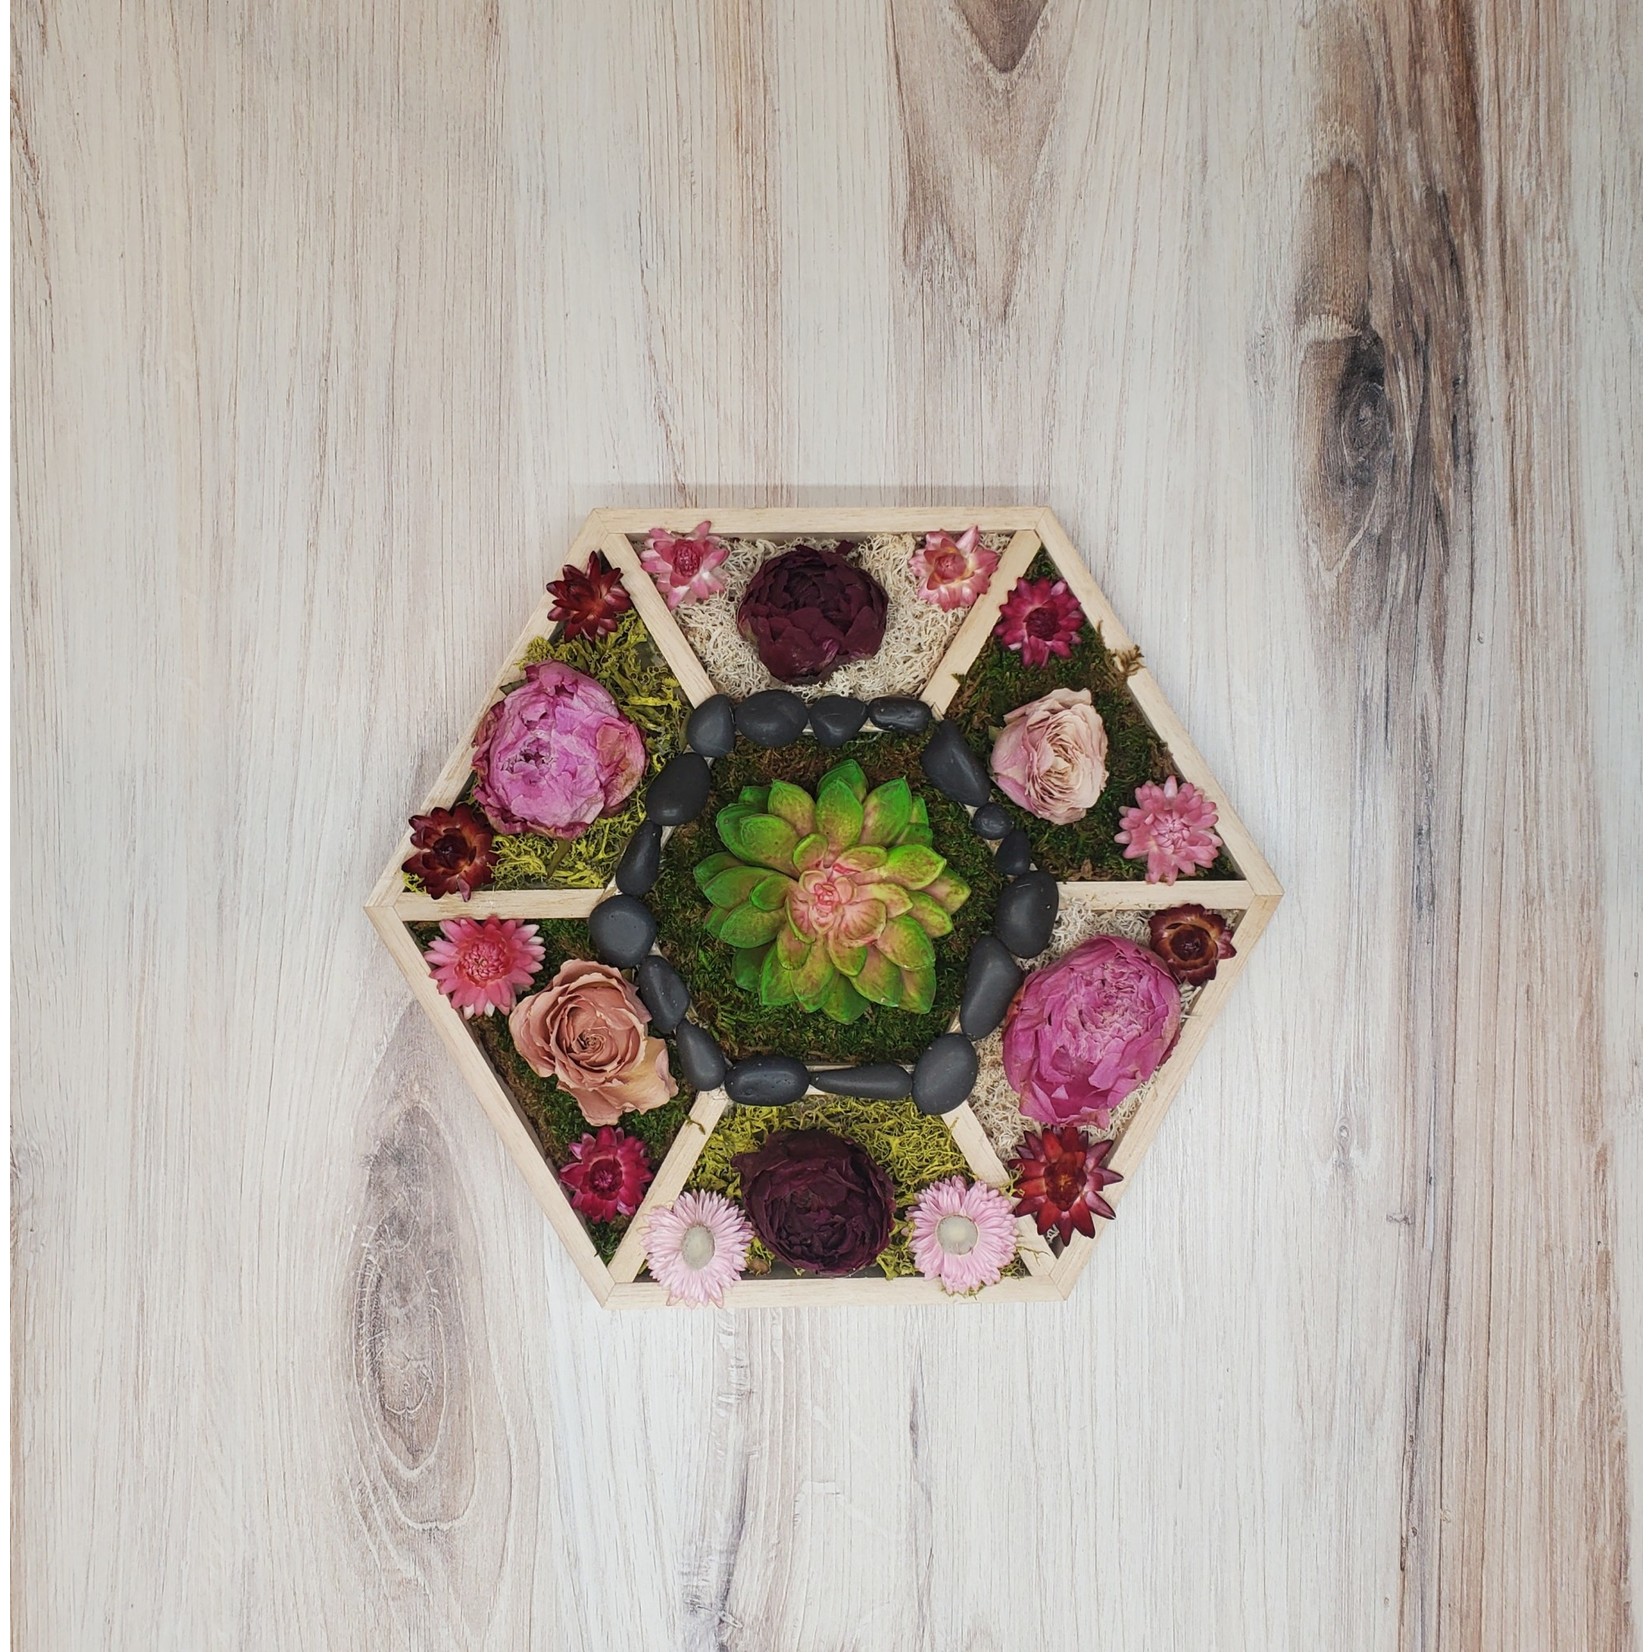 Box of Posies "Hexagon View" - dried flower artwork